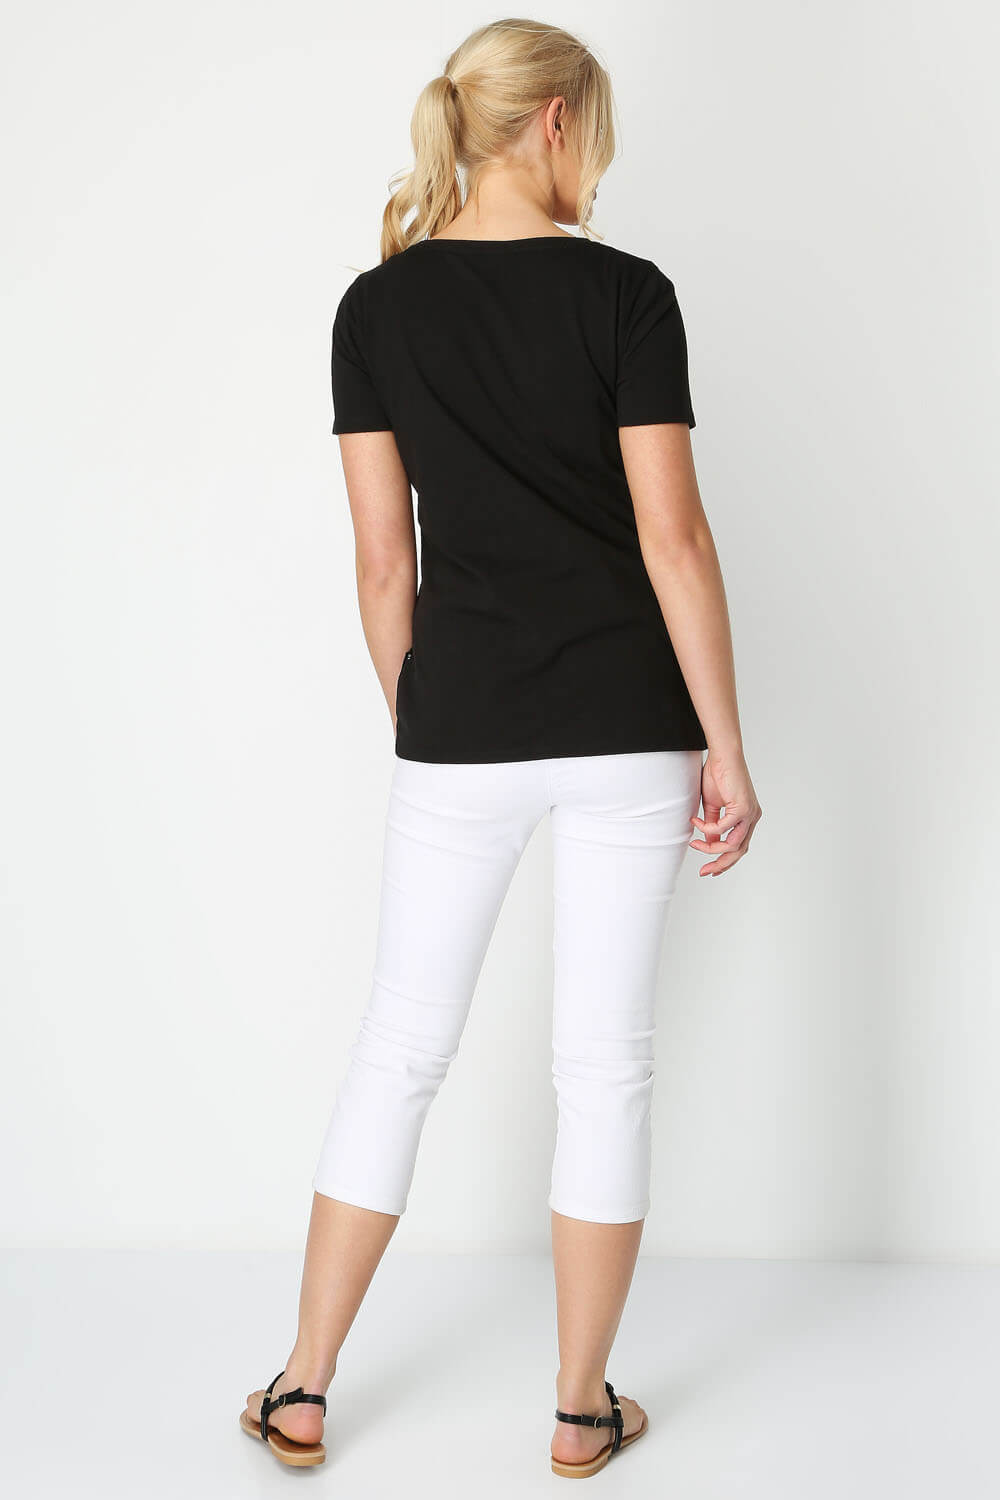 Black Sequin Stripe T-Shirt Top, Image 3 of 8